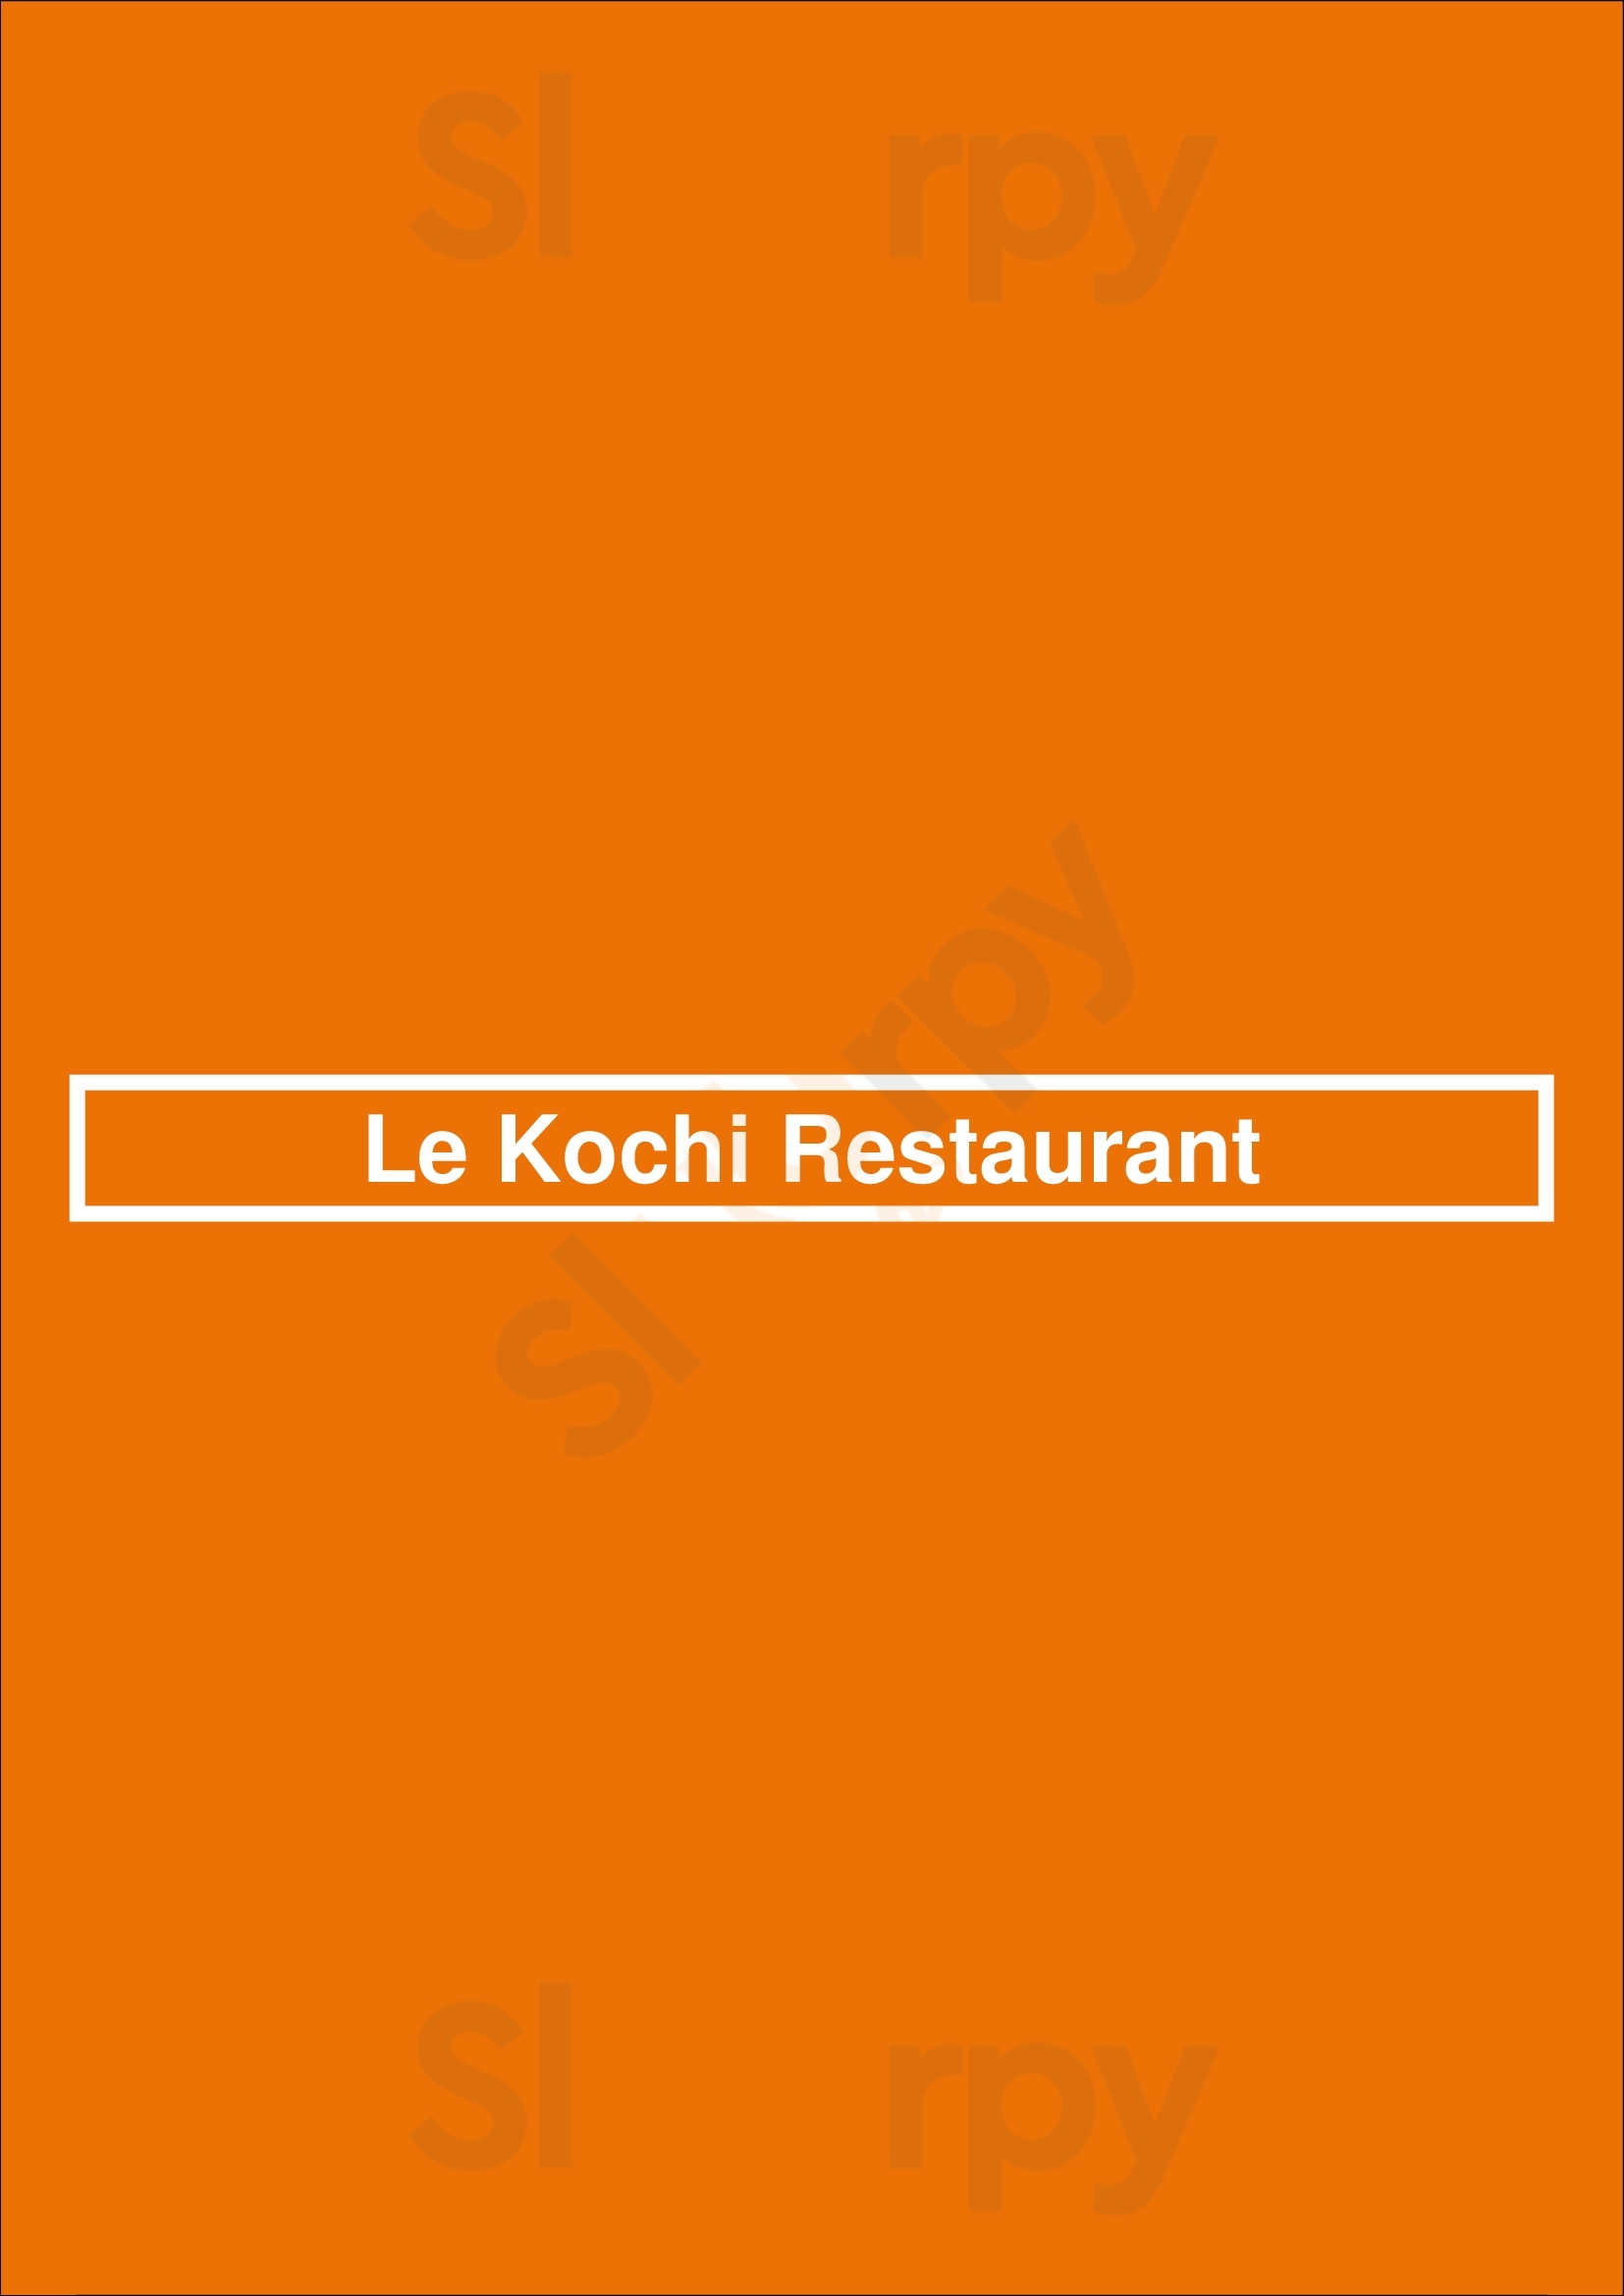 Le Kochi Restaurant Brampton Menu - 1